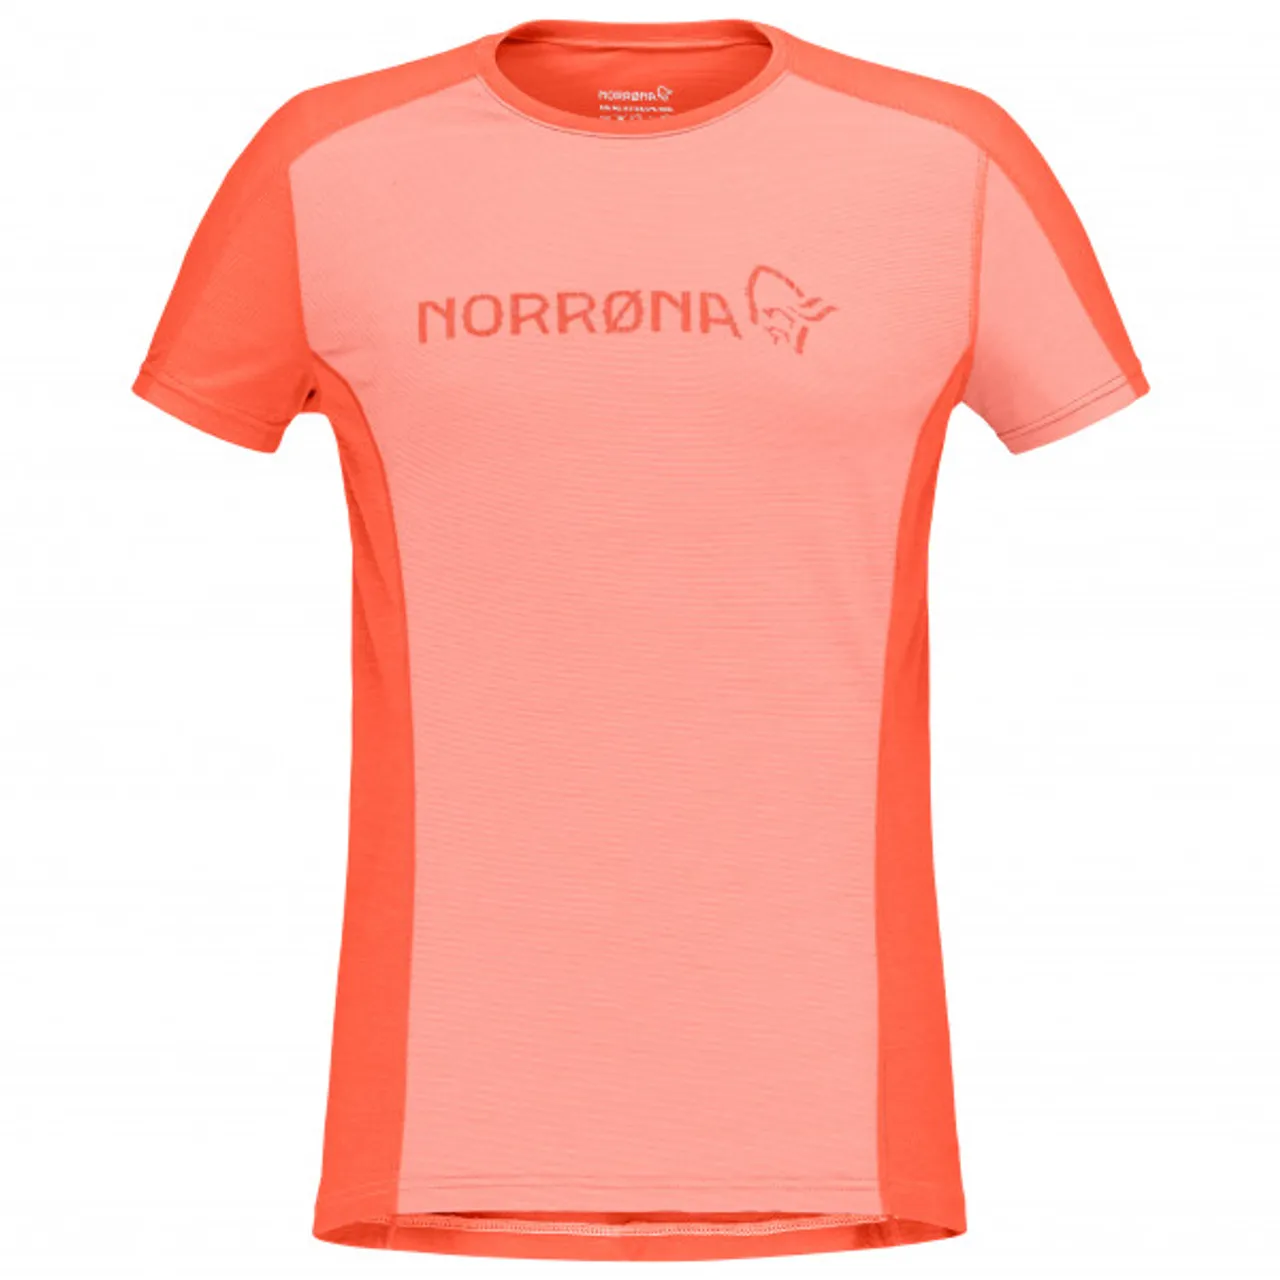 Norrøna - Women's Falketind Equaliser Merino T-Shirt - Merinoshirt